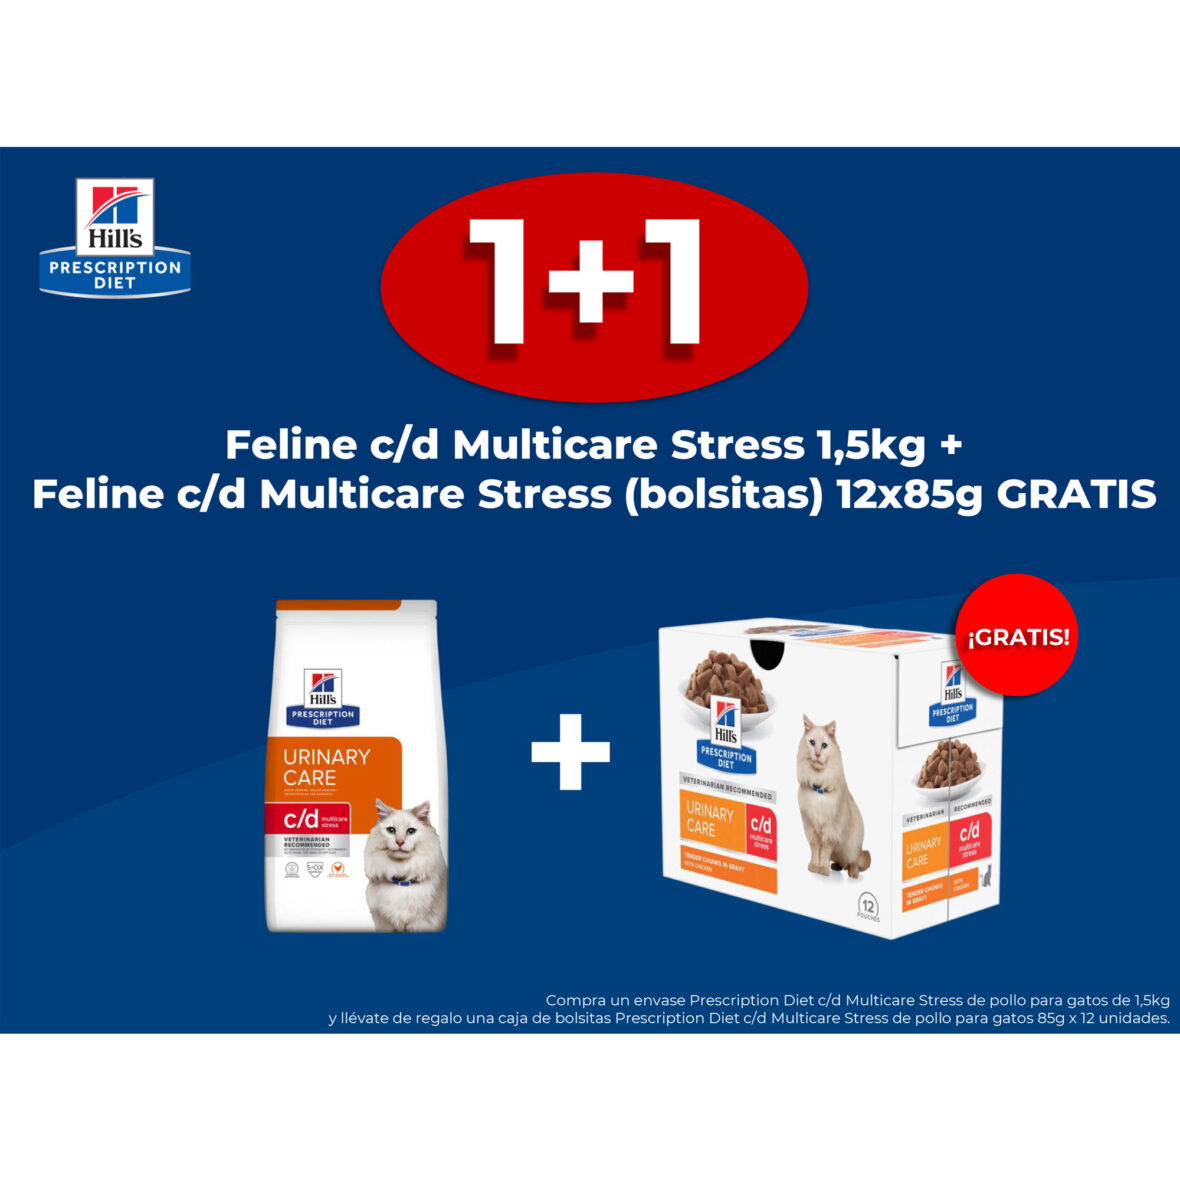 1+1 Feline c/d Multicare Stress 1,5kg + Feline c/d Multicare Stress (bolsitas) 12x85g GRATIS